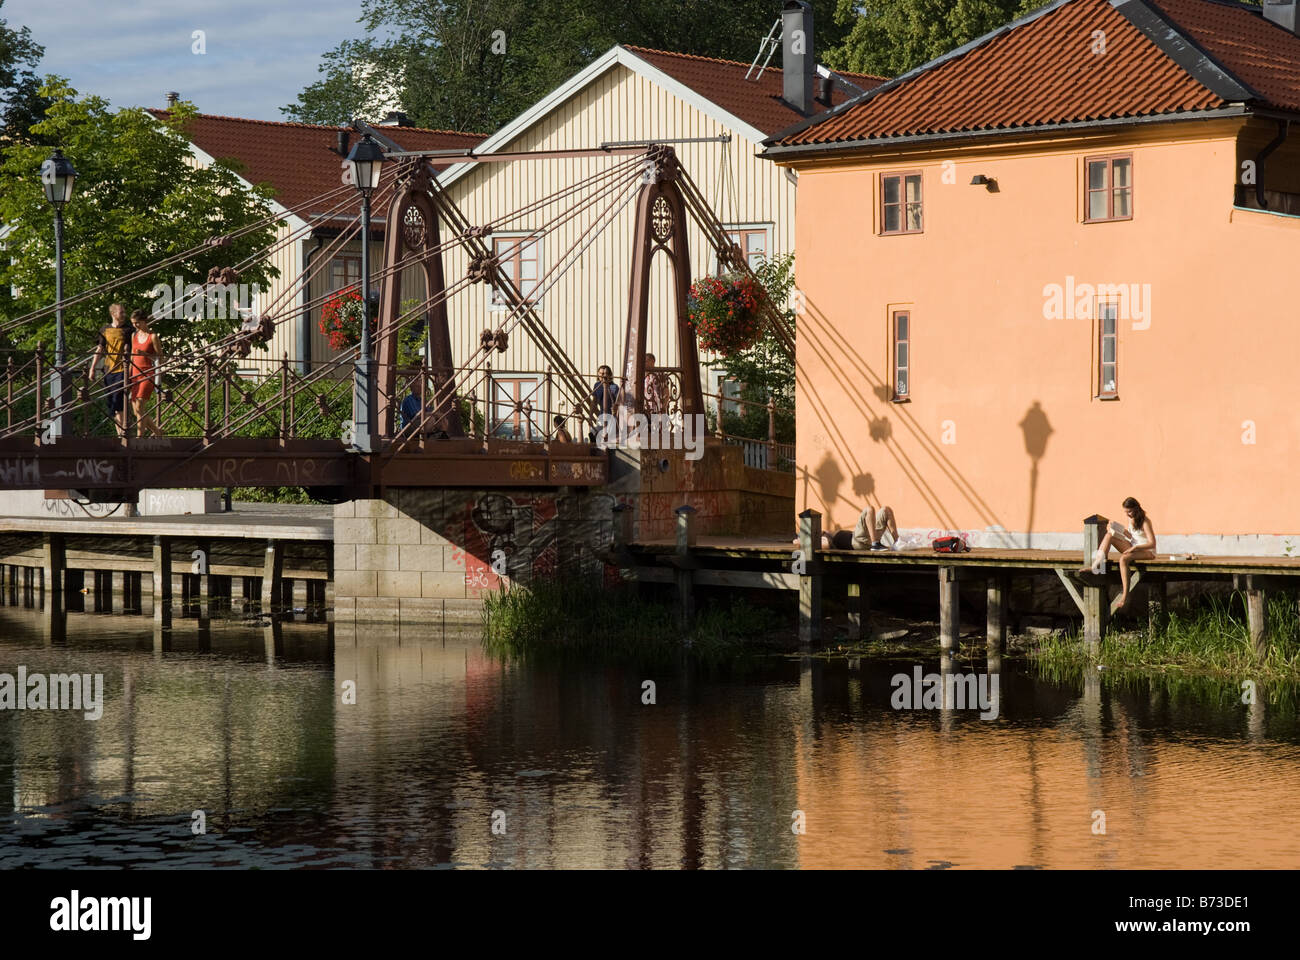 People enjoying the sunshine next to the River Fyris, Uppsala, Sweden Stock Photo